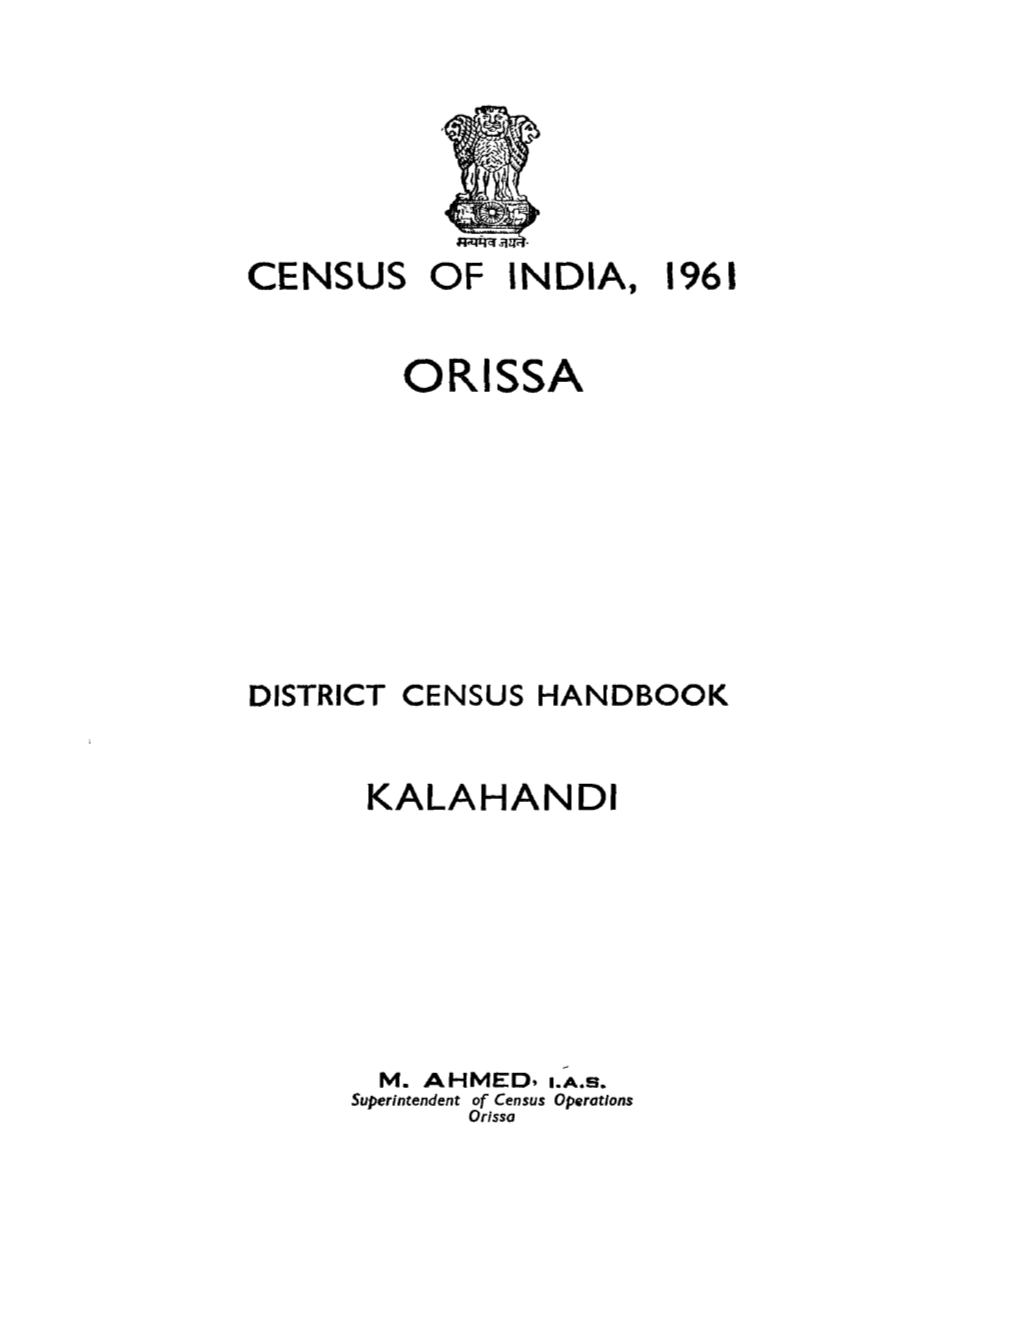 District Census Handbook, Kalahandi, Orissa